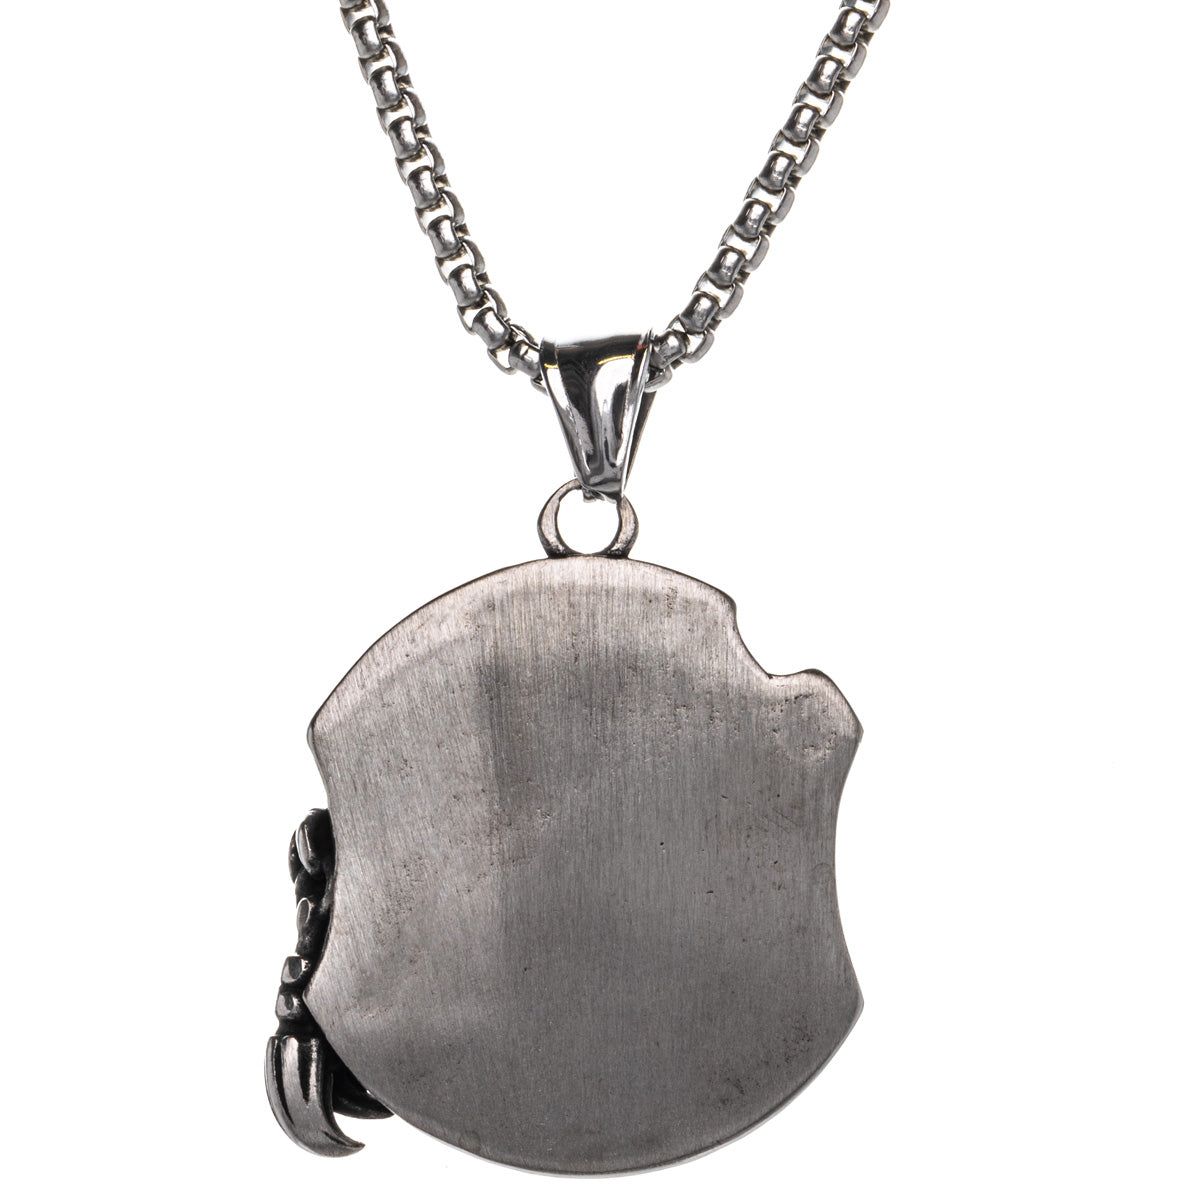 Viking shield pendant necklace (Steel 316L)